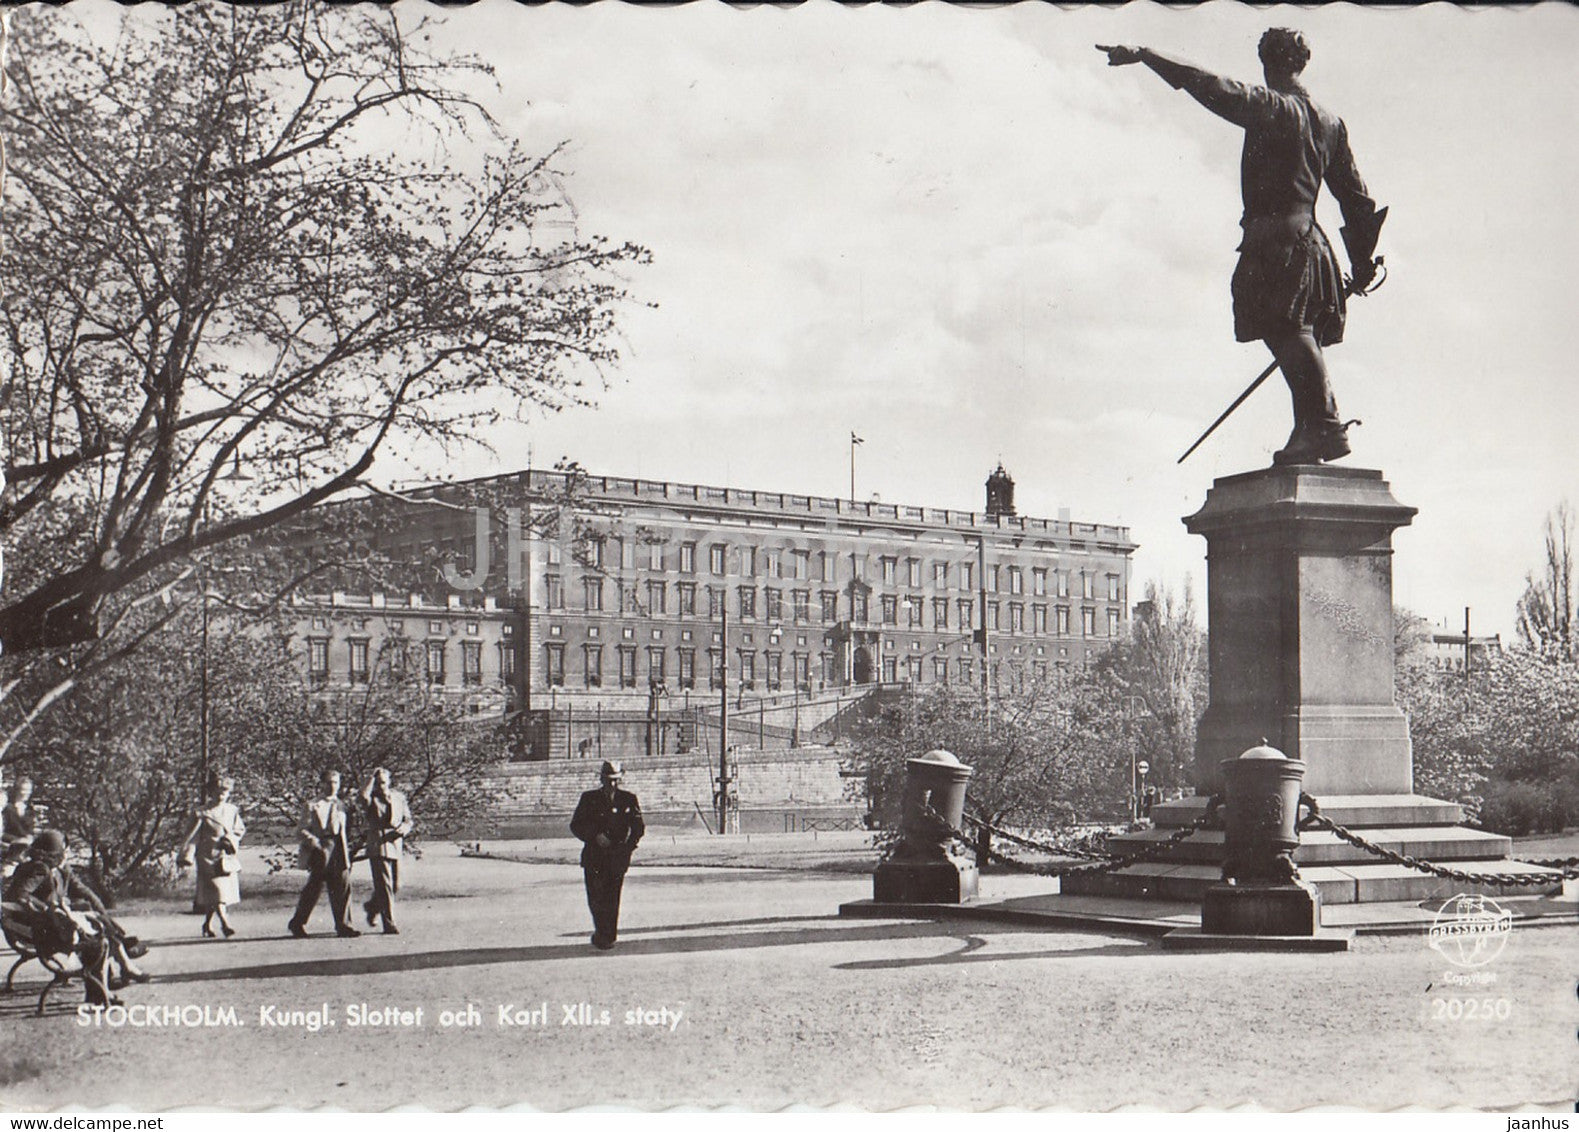 Stockholm - Kungl Slottet och Karl XII staty - Royal Palace and Karl XII statue - old postcard - 1958 - Sweden - used - JH Postcards